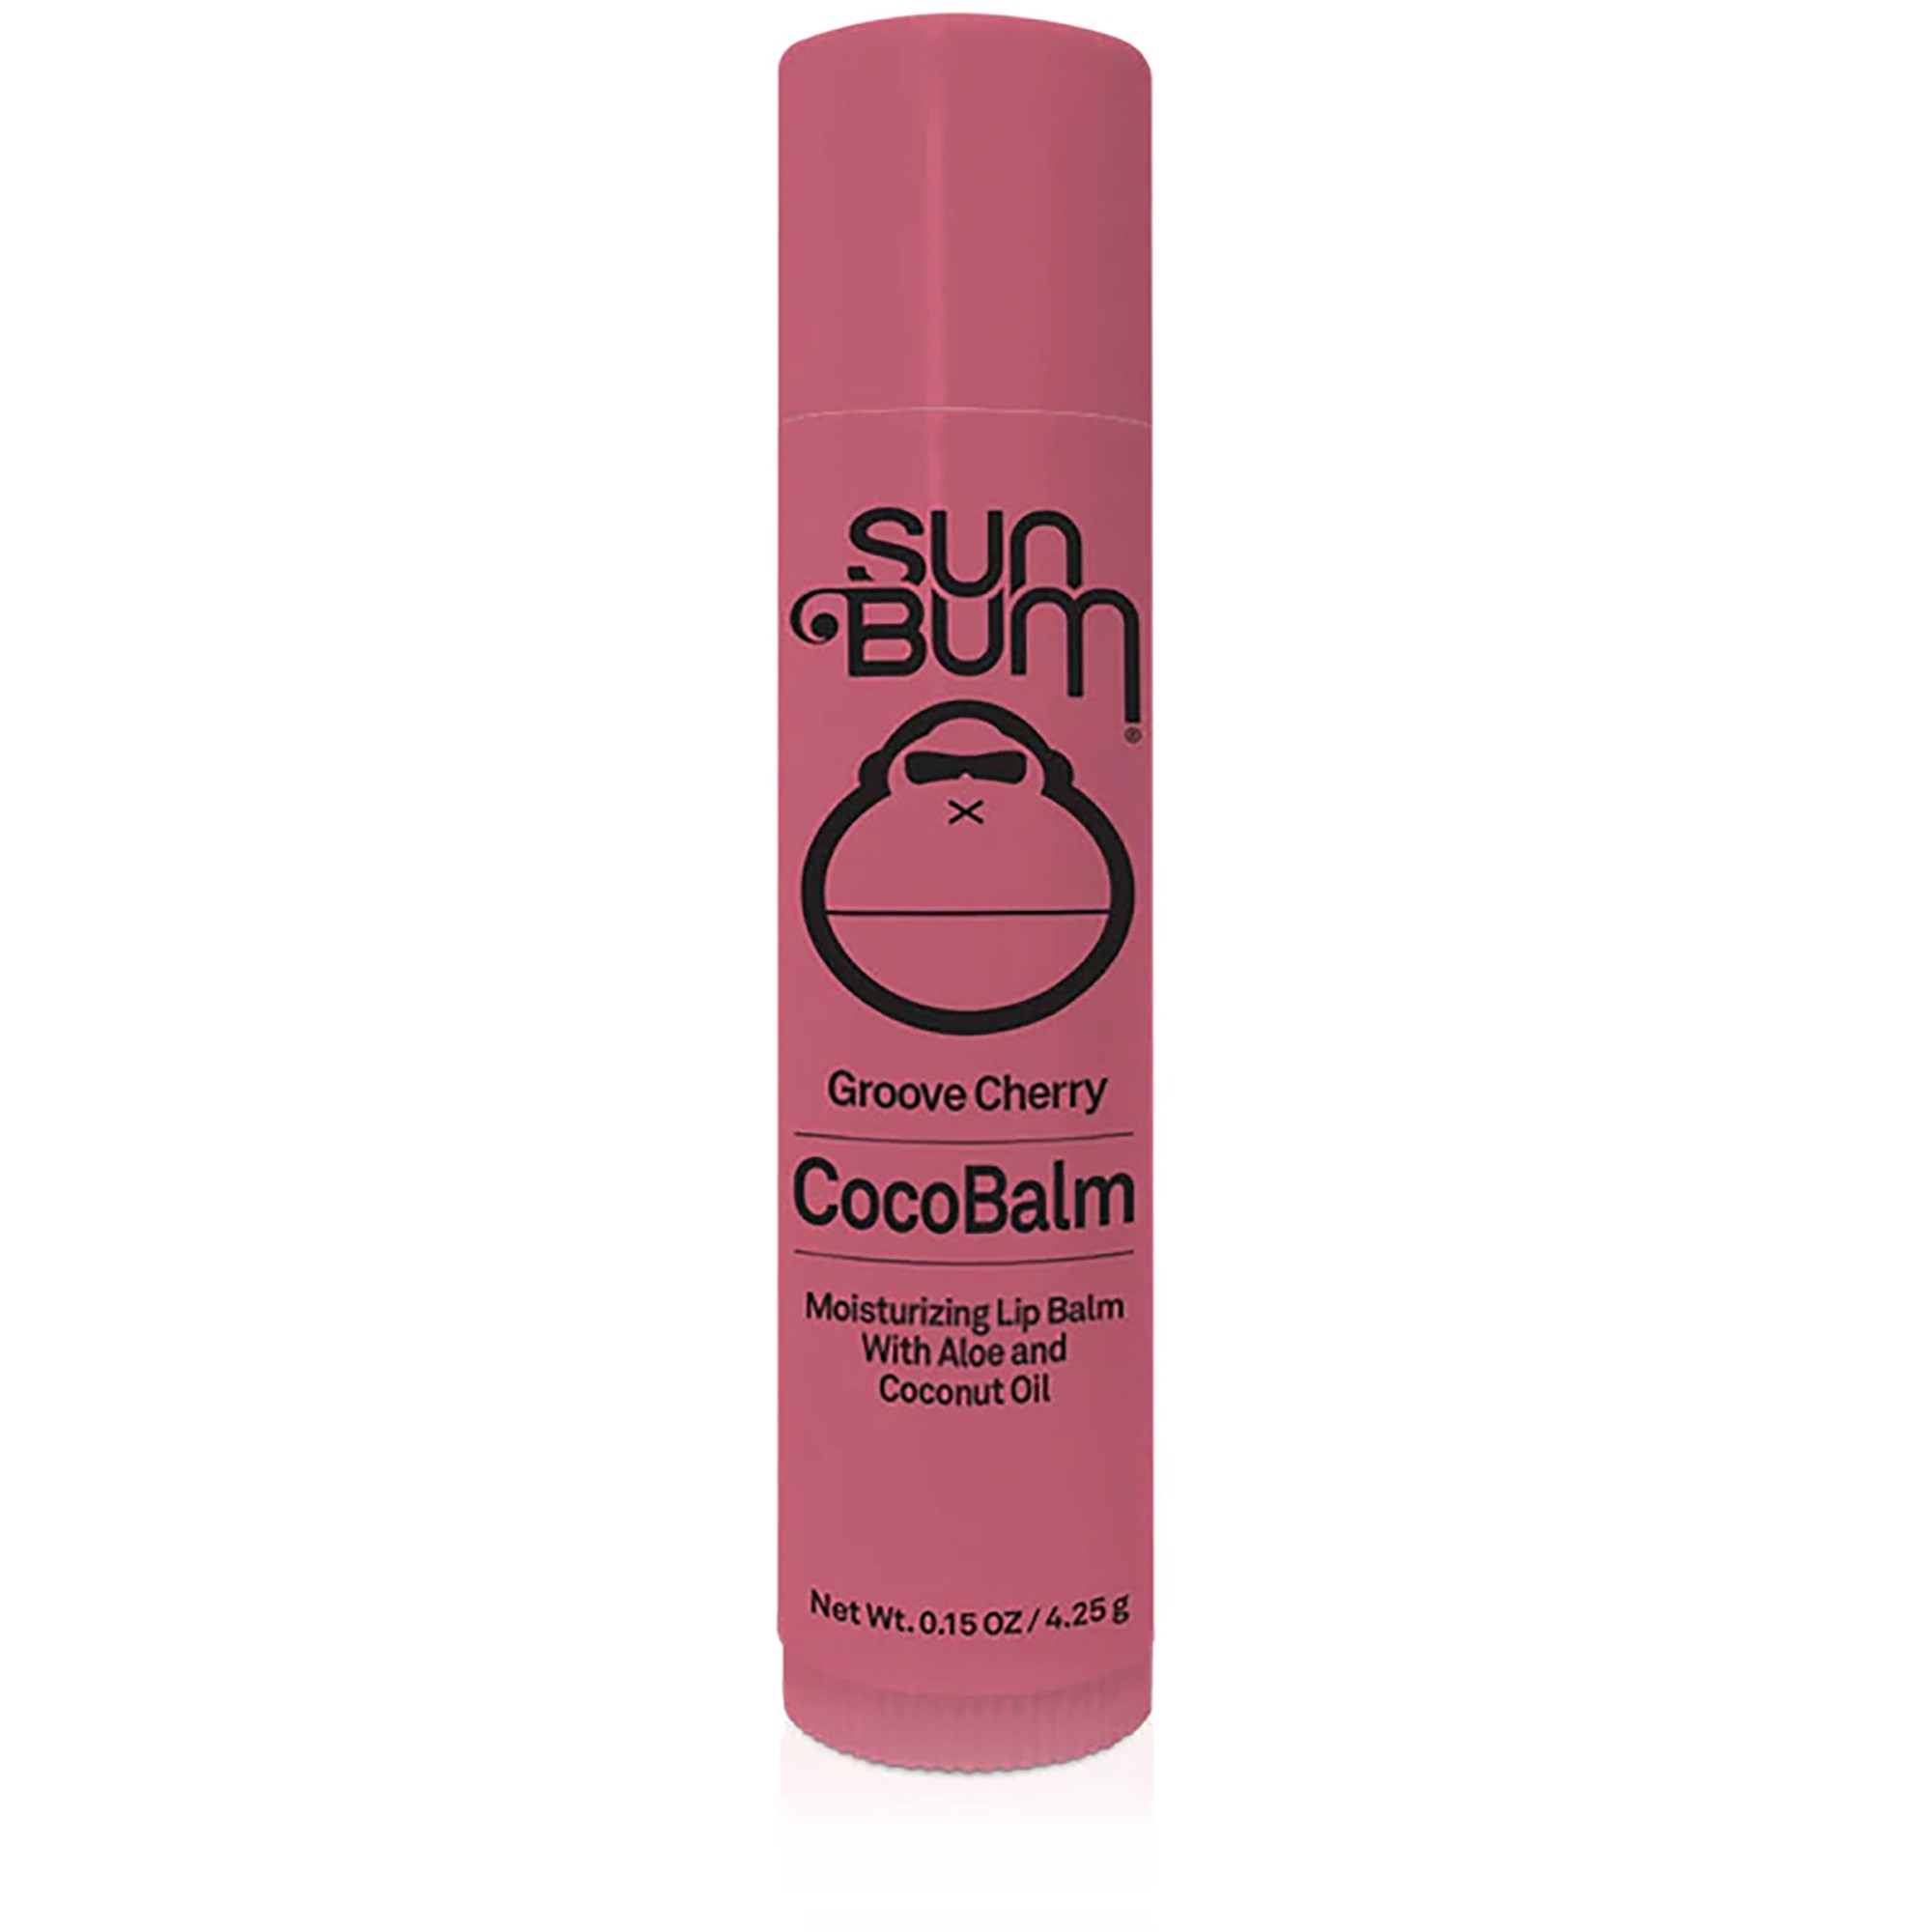 Läs mer om Sun Bum CocoBalm Moisturizing Lip Balm Groove Cherry